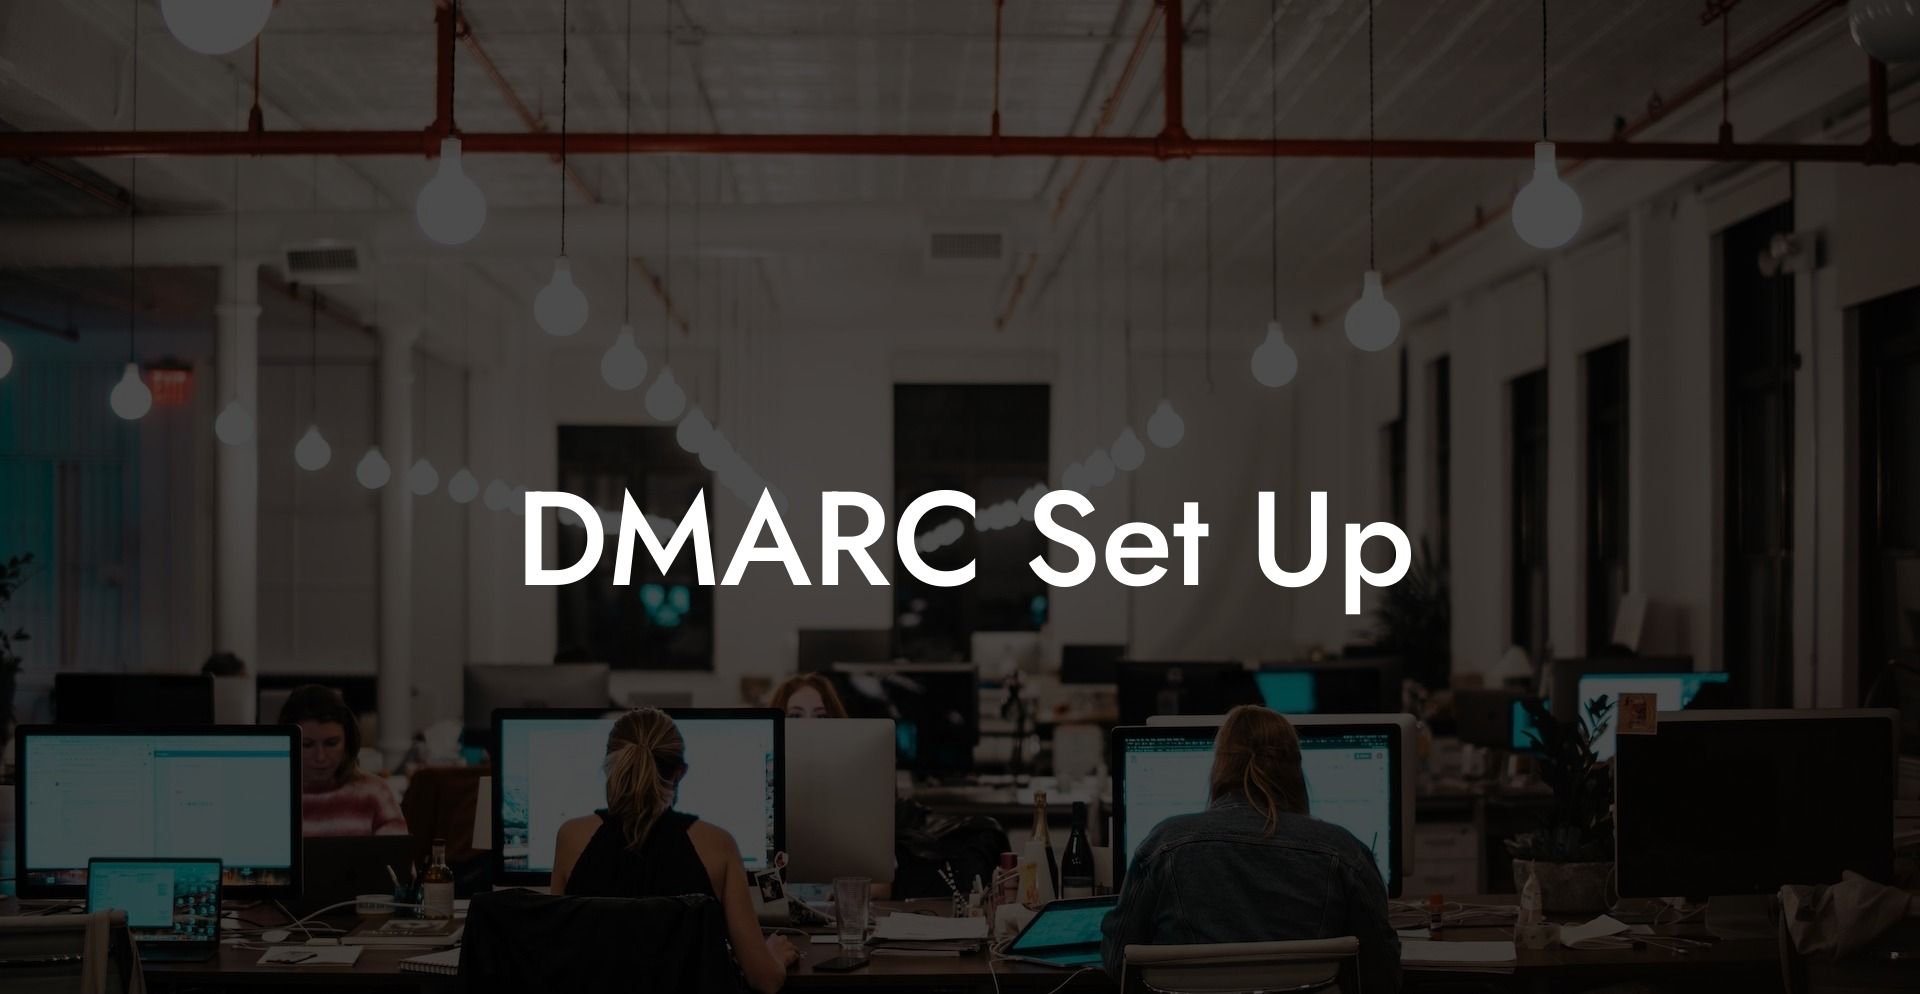 DMARC Set Up